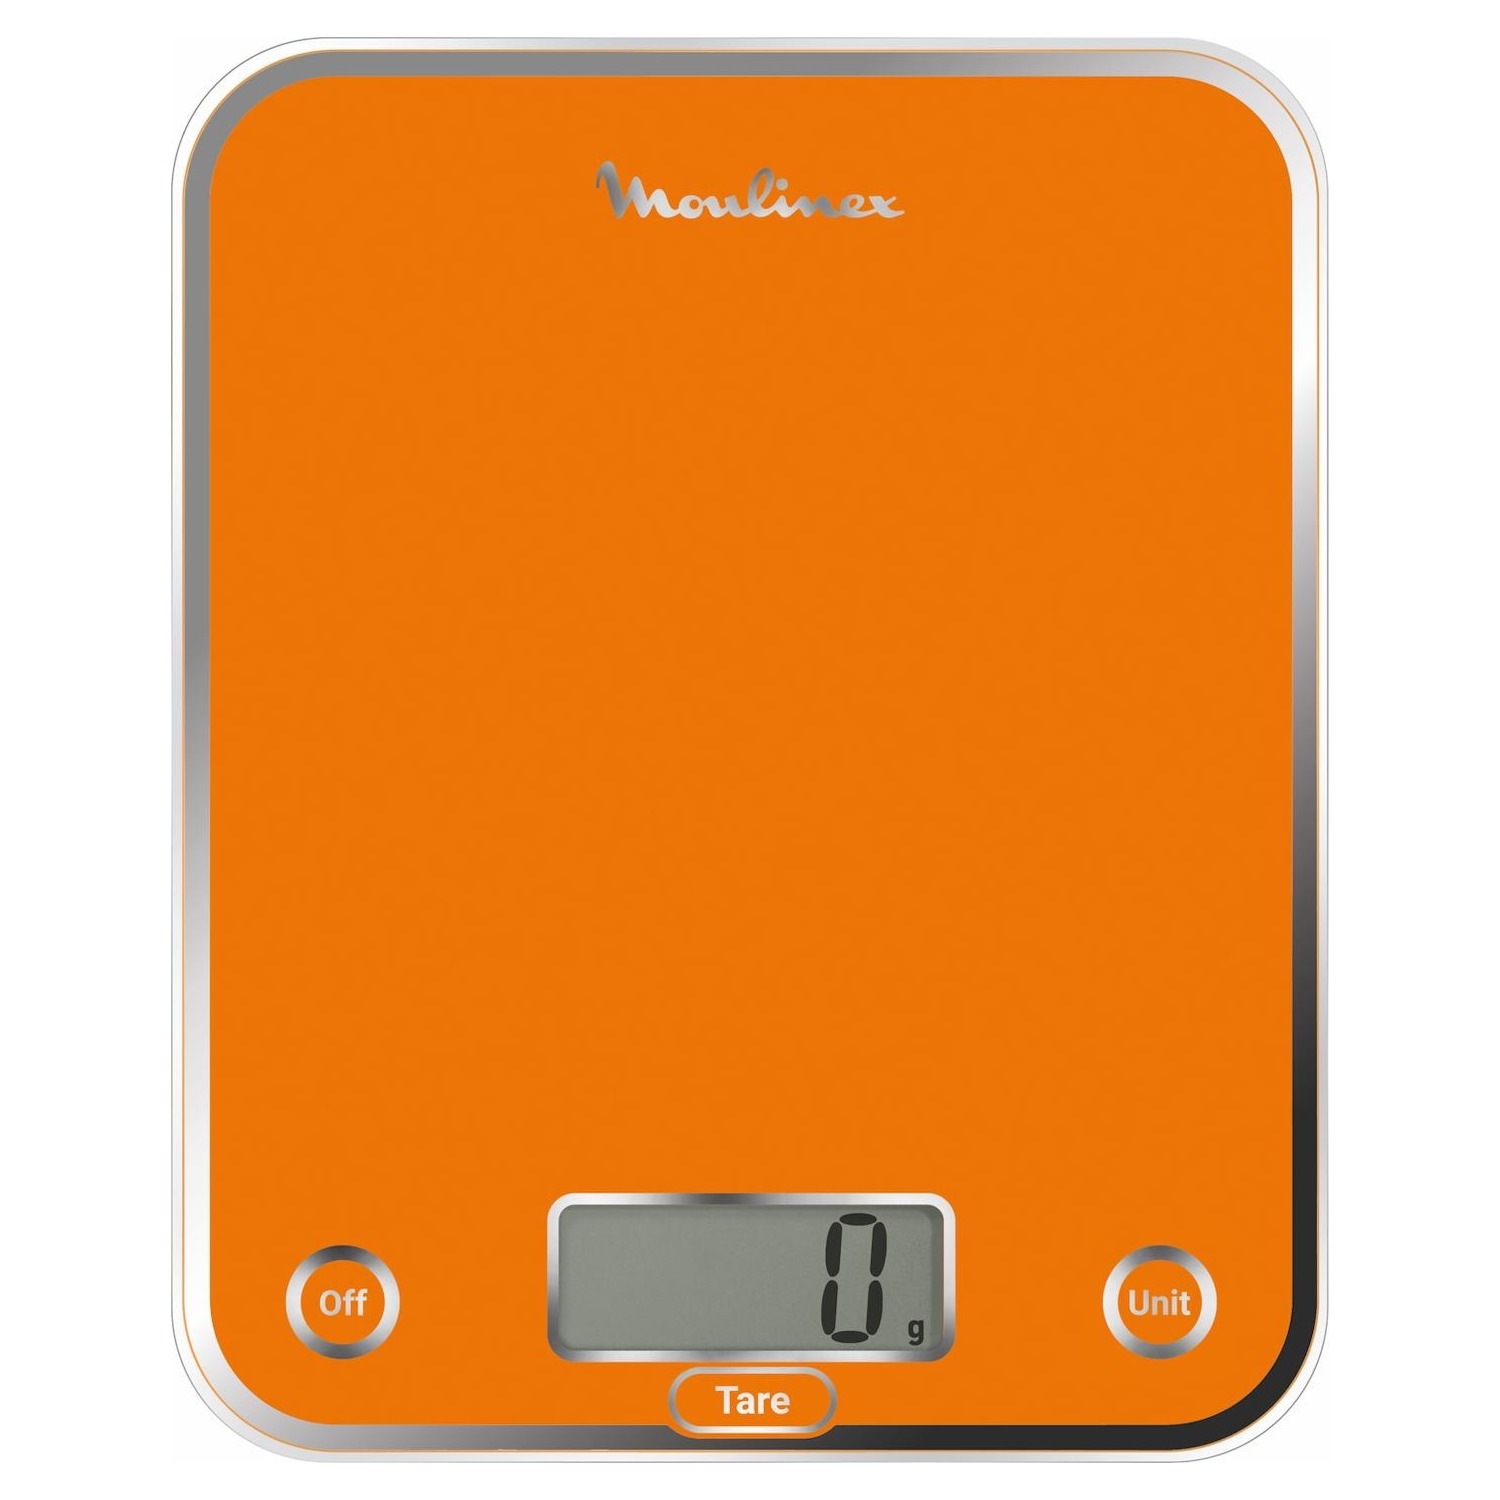 Immagine per Bilancia da cucina Moulinex BN5001 Orange Arancio capacita' 5KG da DIMOStore